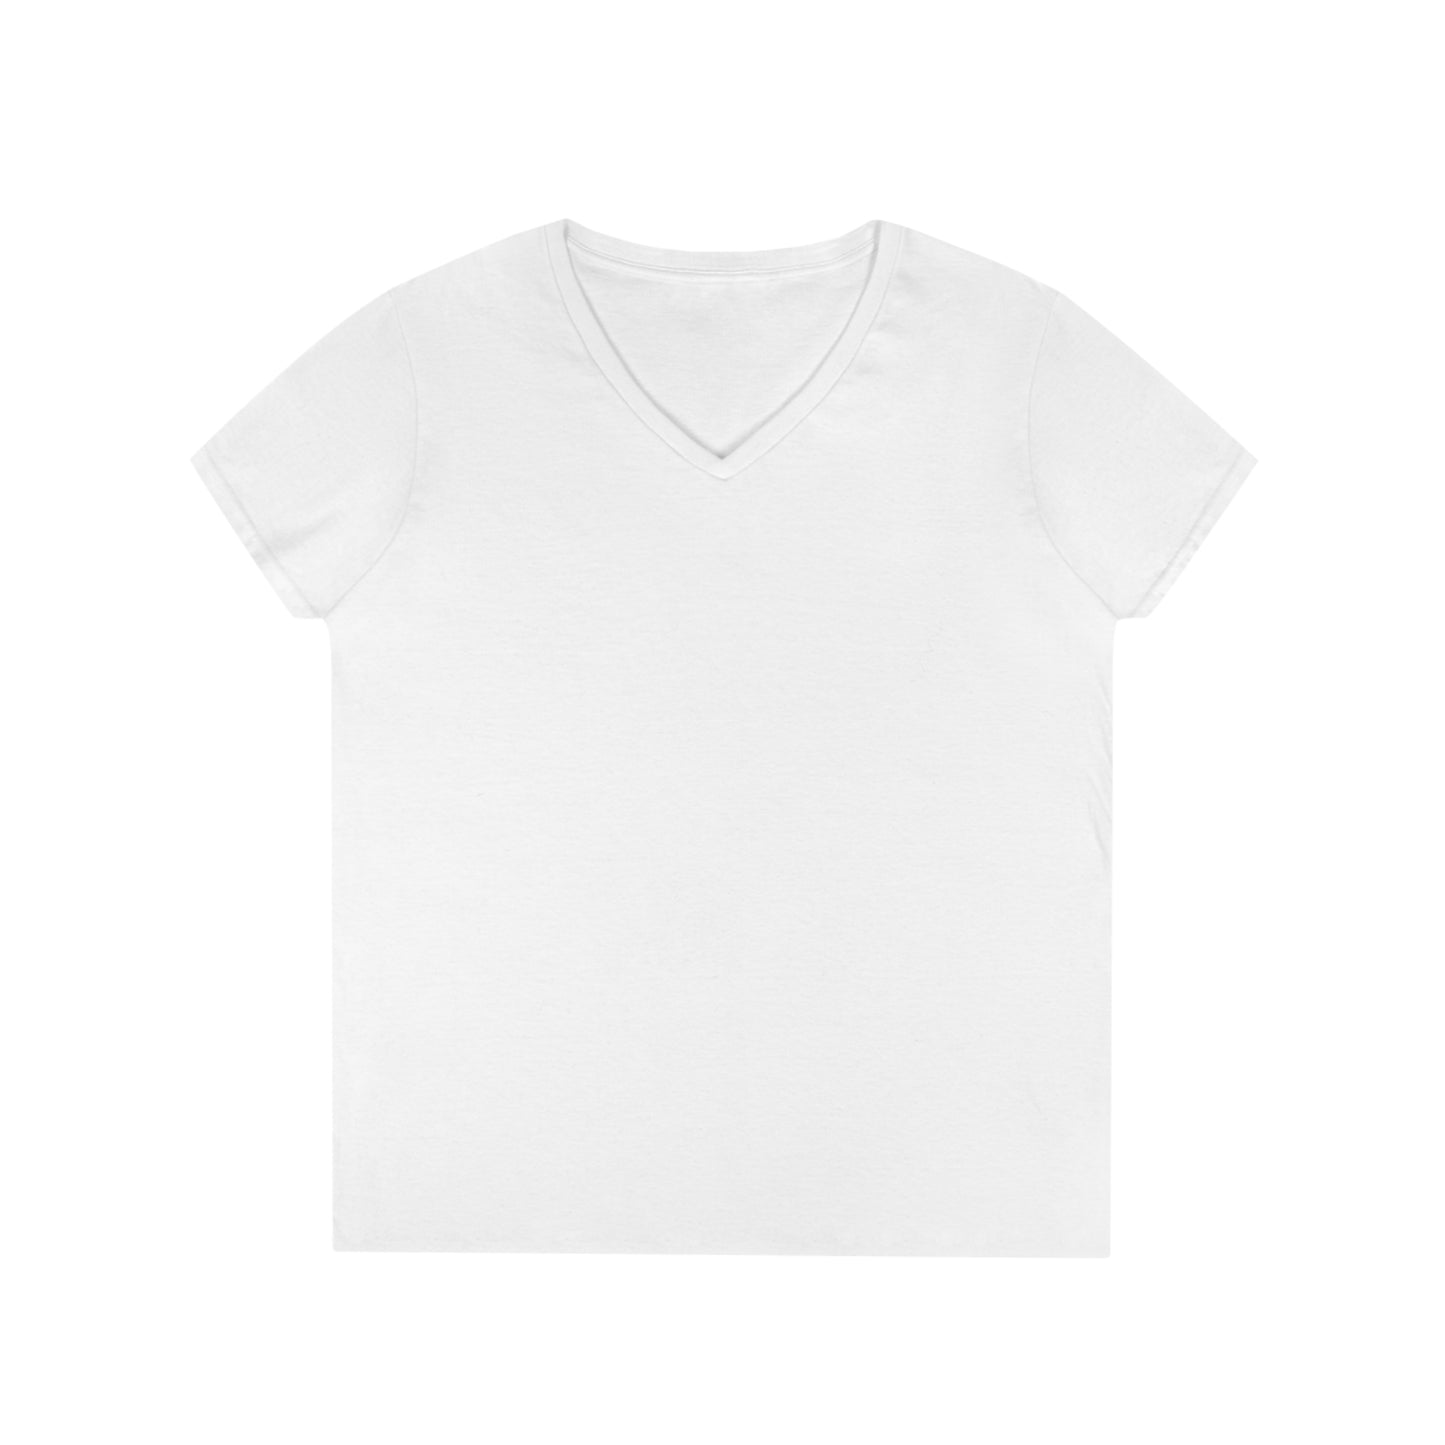 AITC Ladies' V-Neck T-Shirt